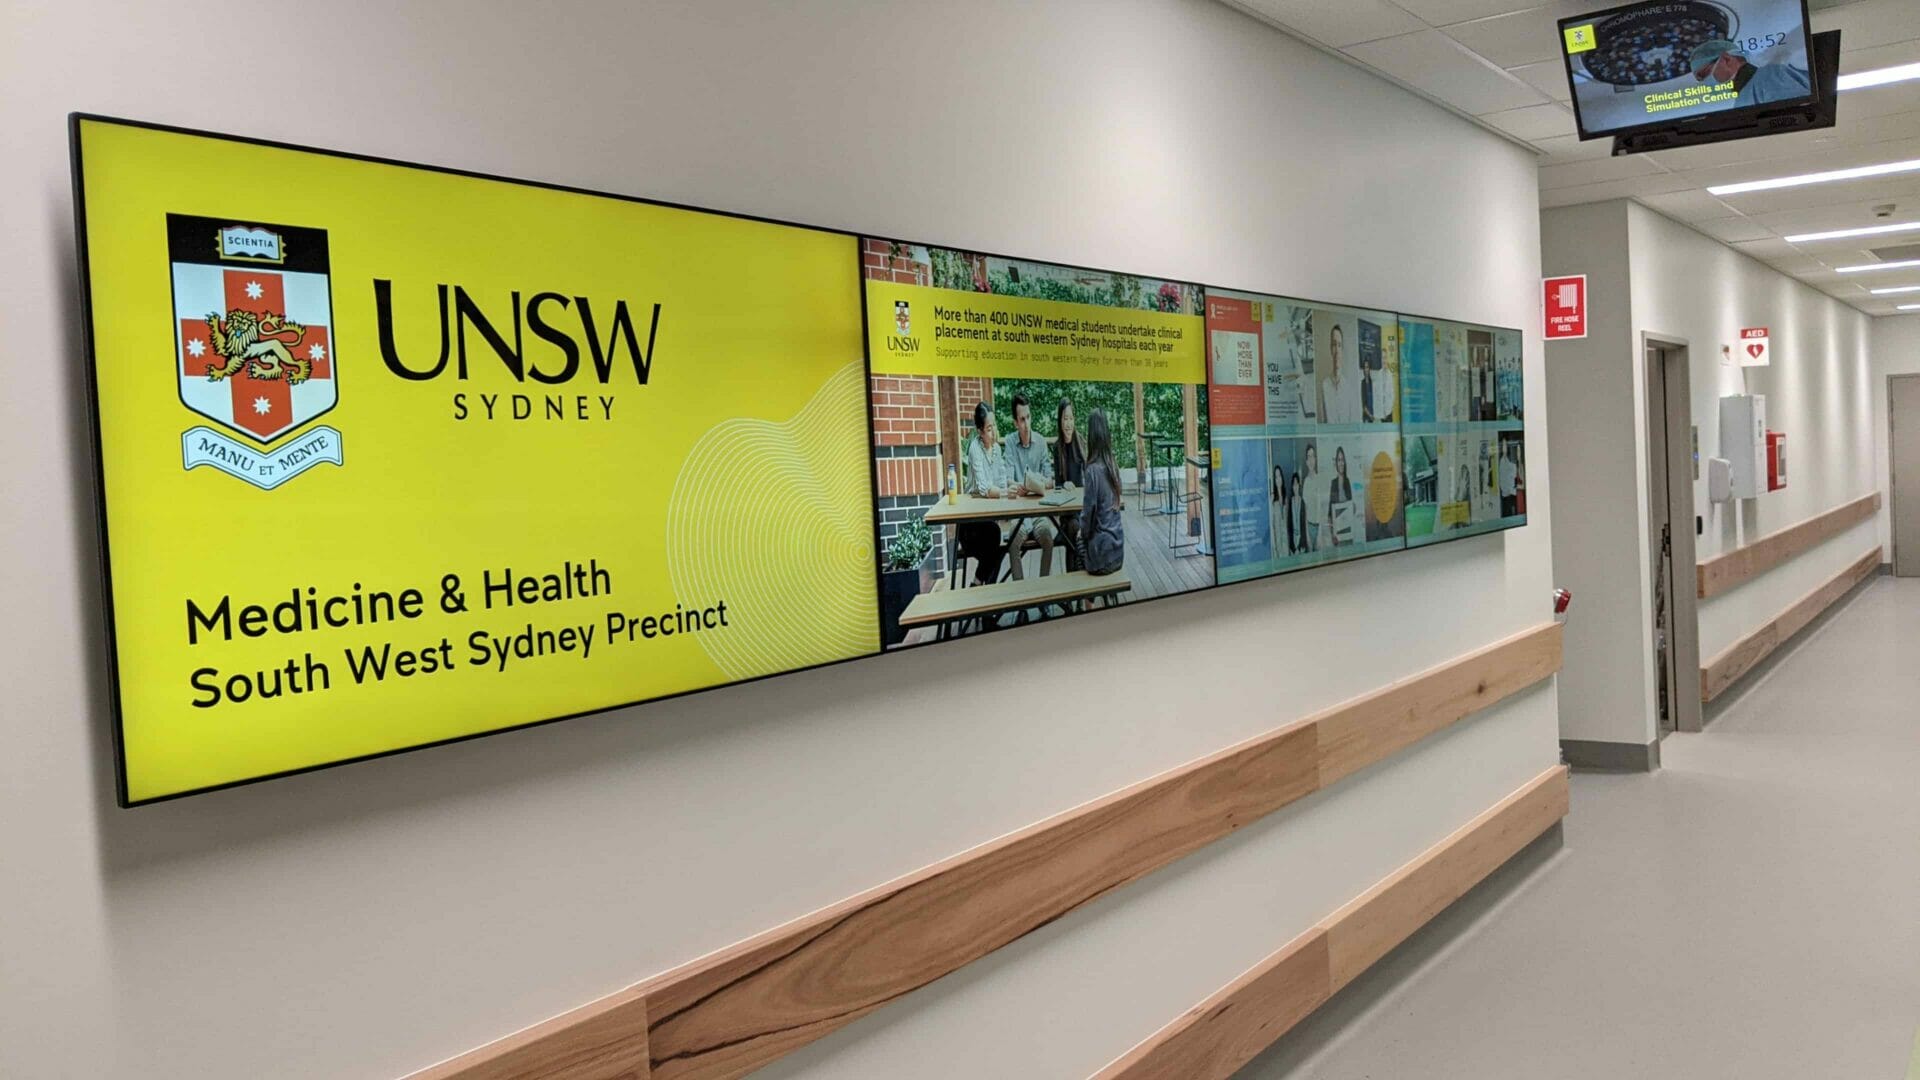 Advertise Me UNSW Medicine Health South West Sydney Precinct 4x1 Video Wall 1